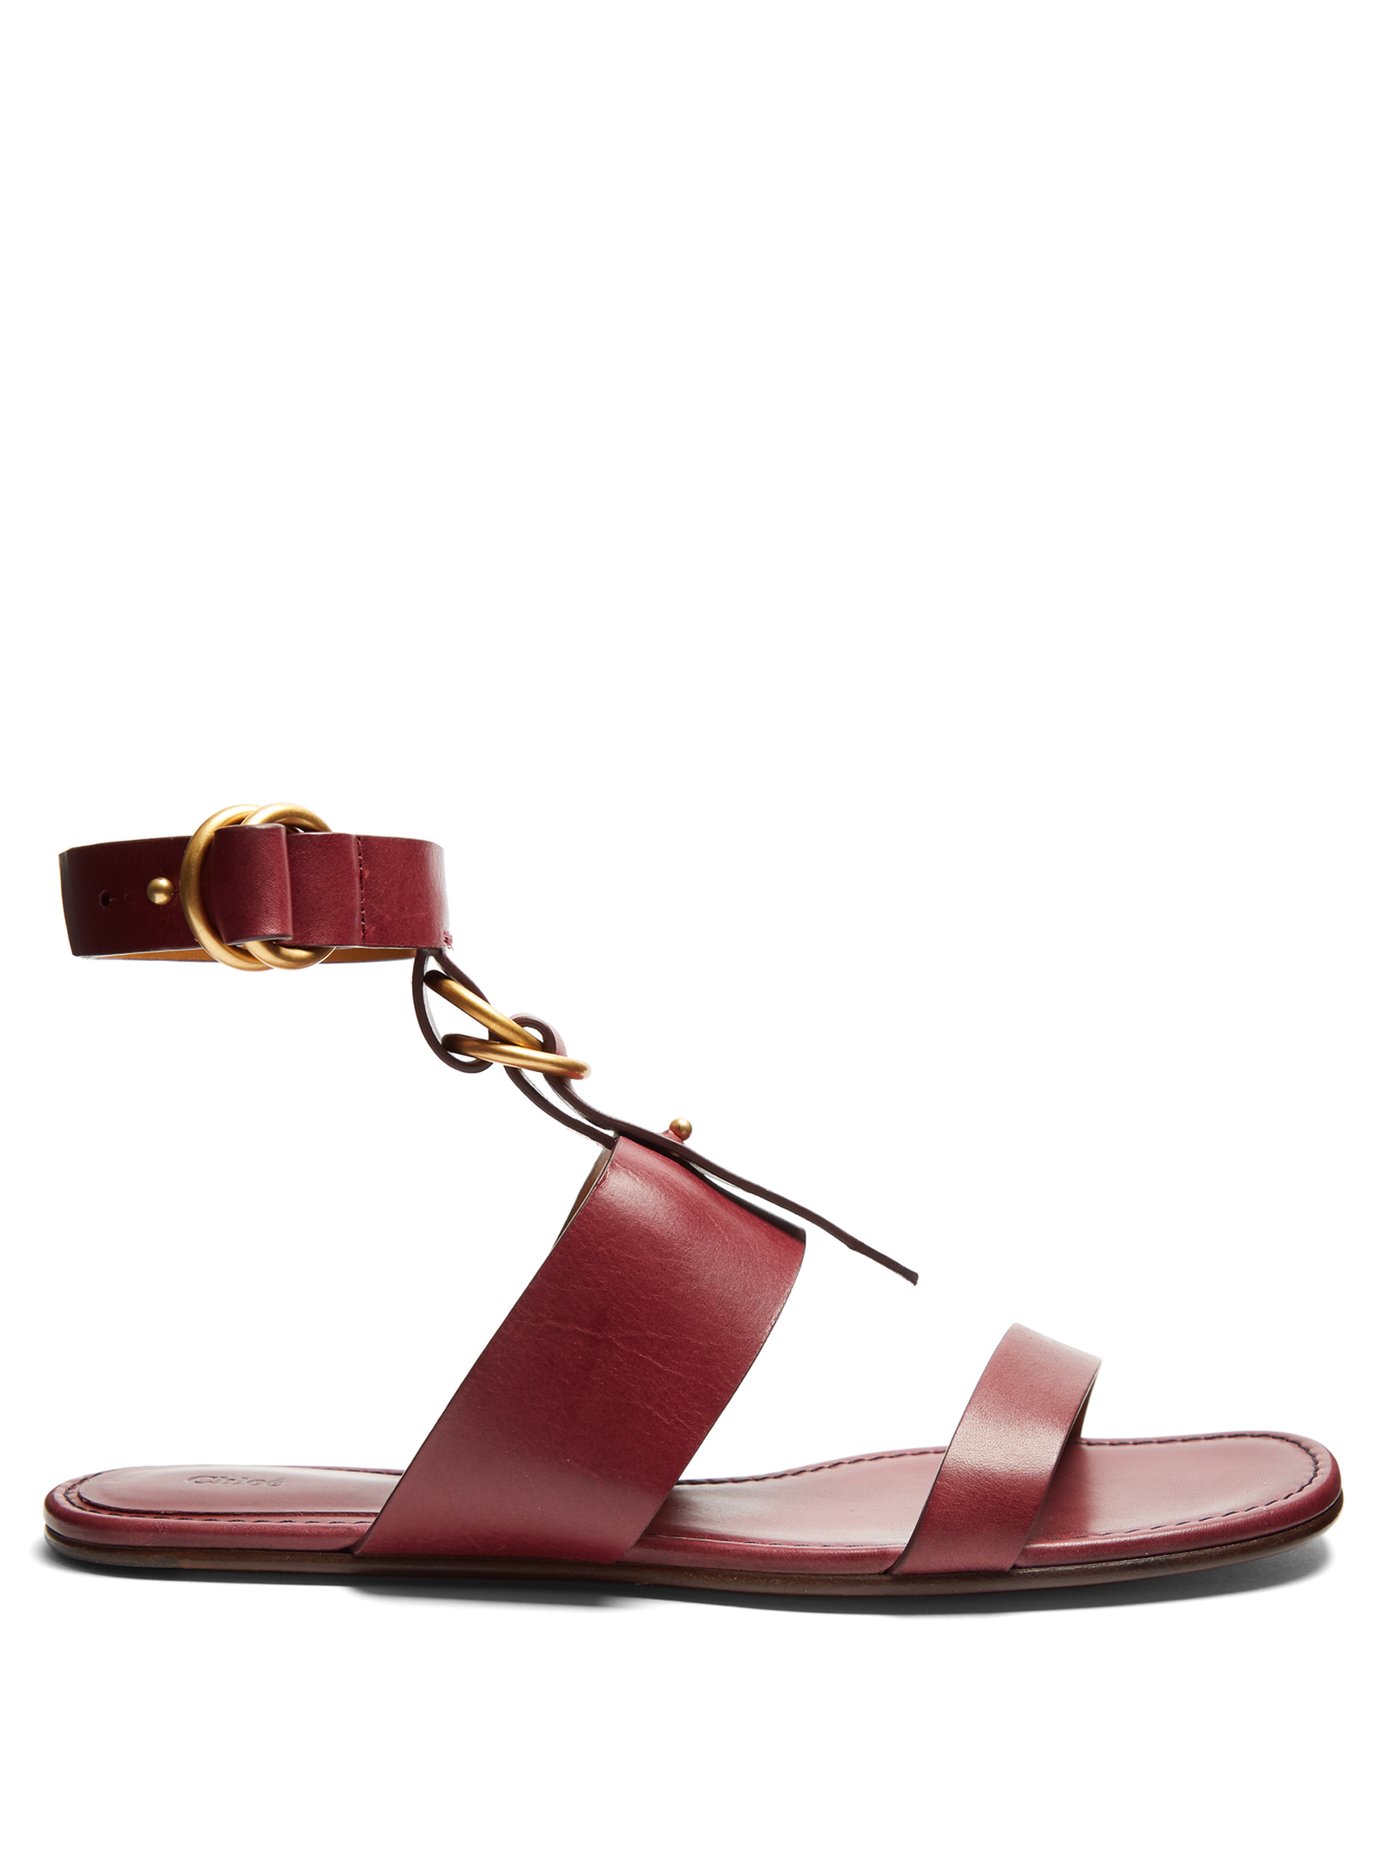 Kingsley leather flat sandals | Chloé 